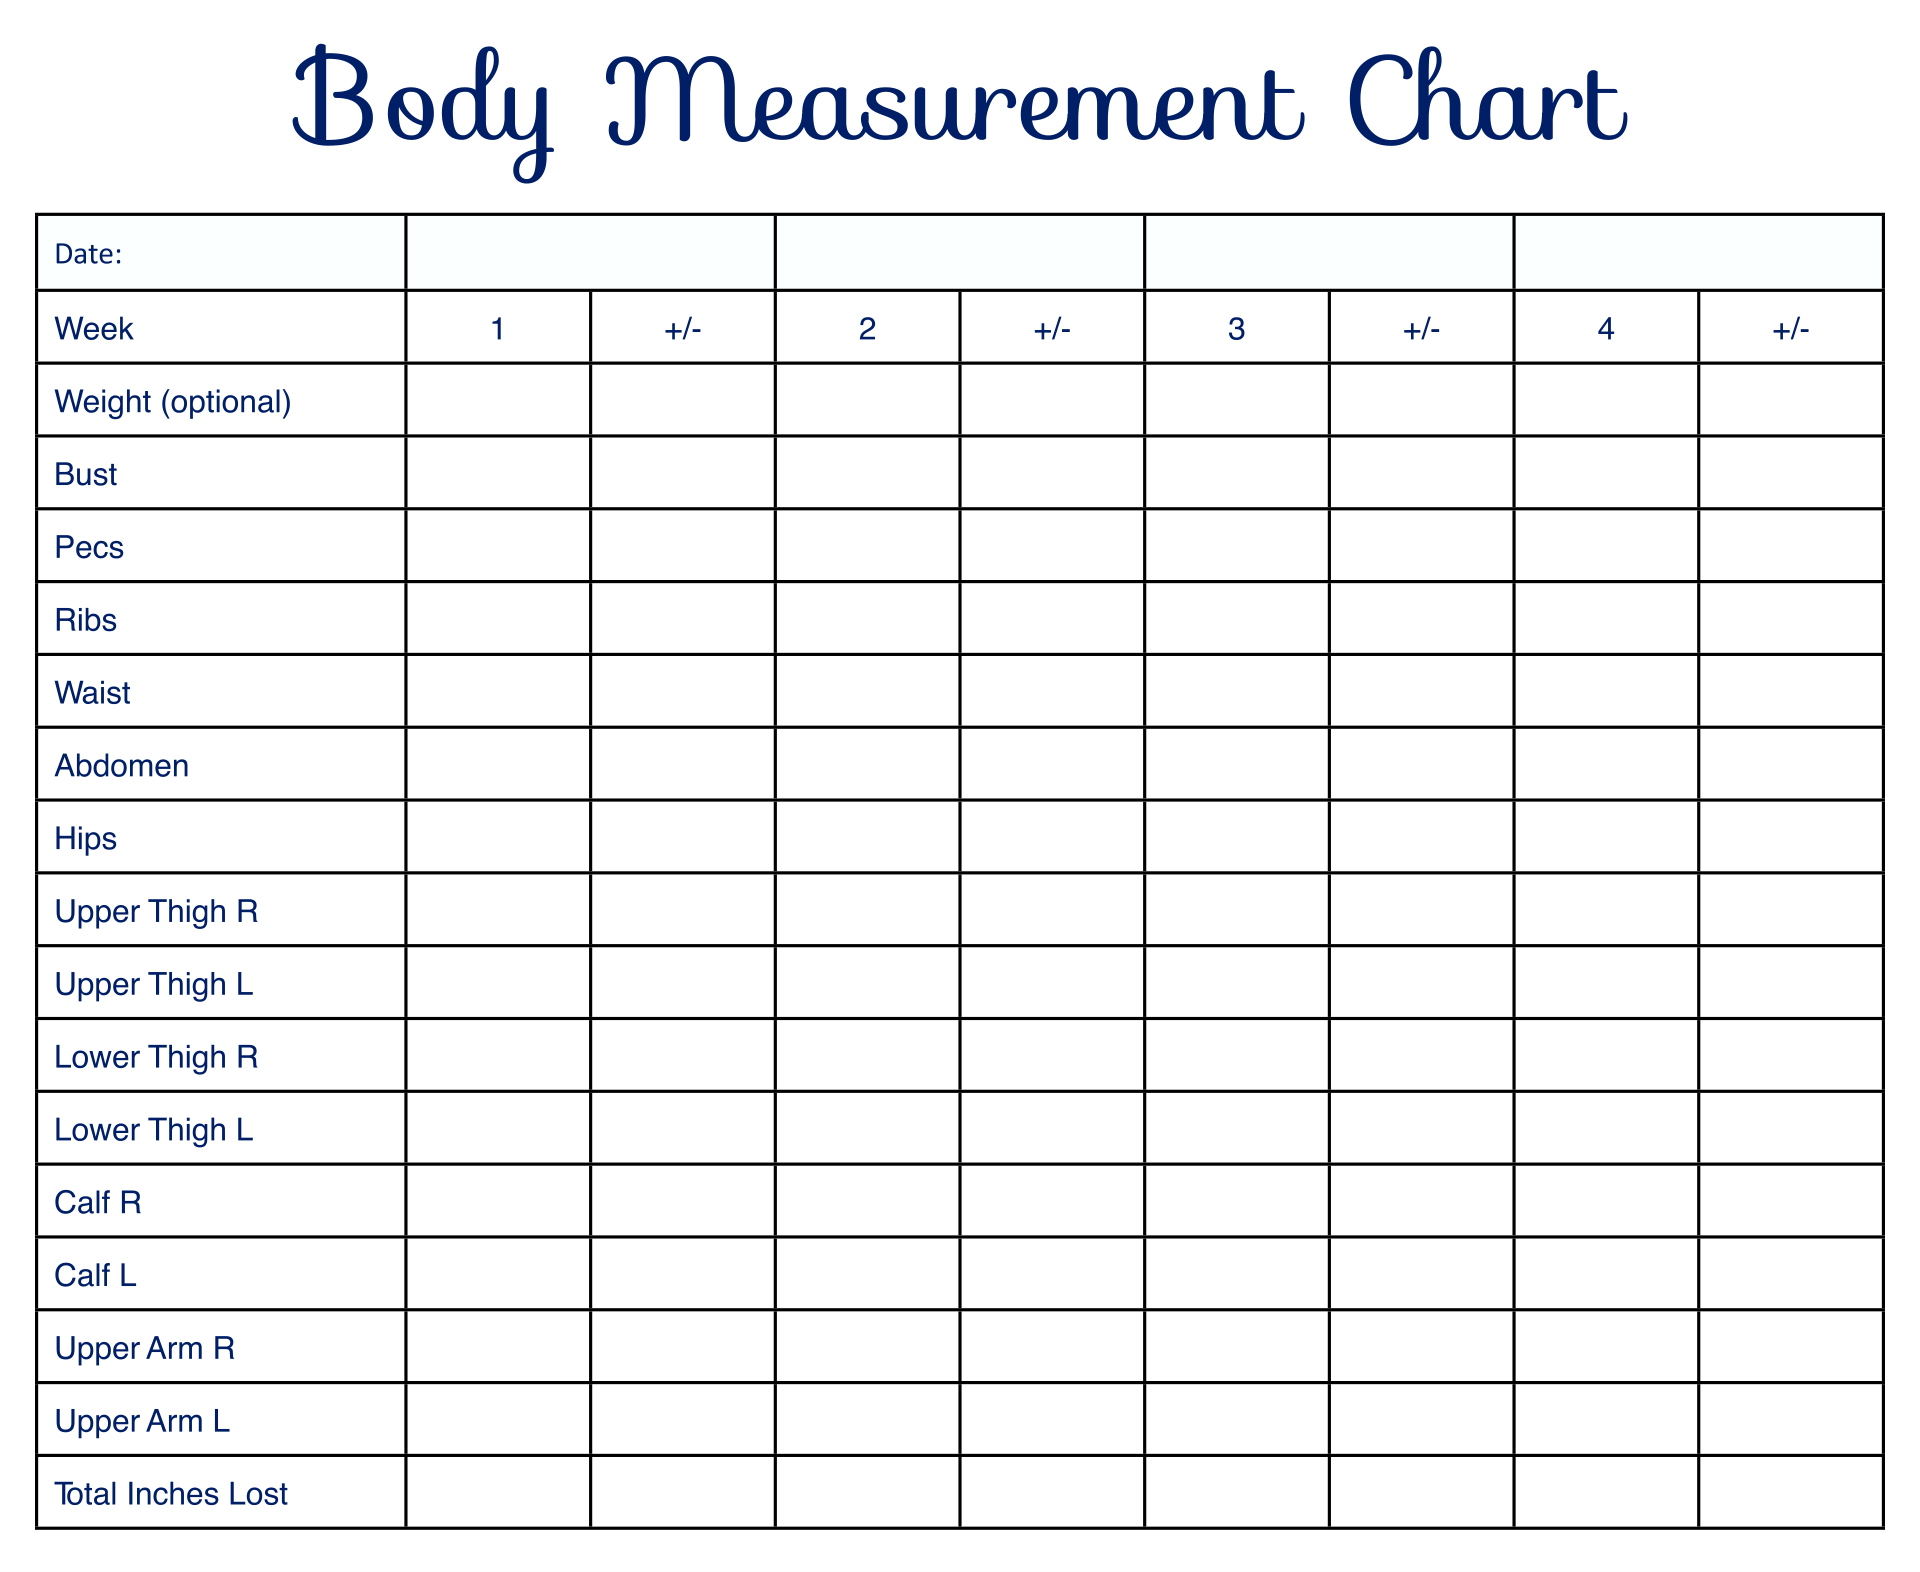 Body Measurement Chart For Weight Loss Progress